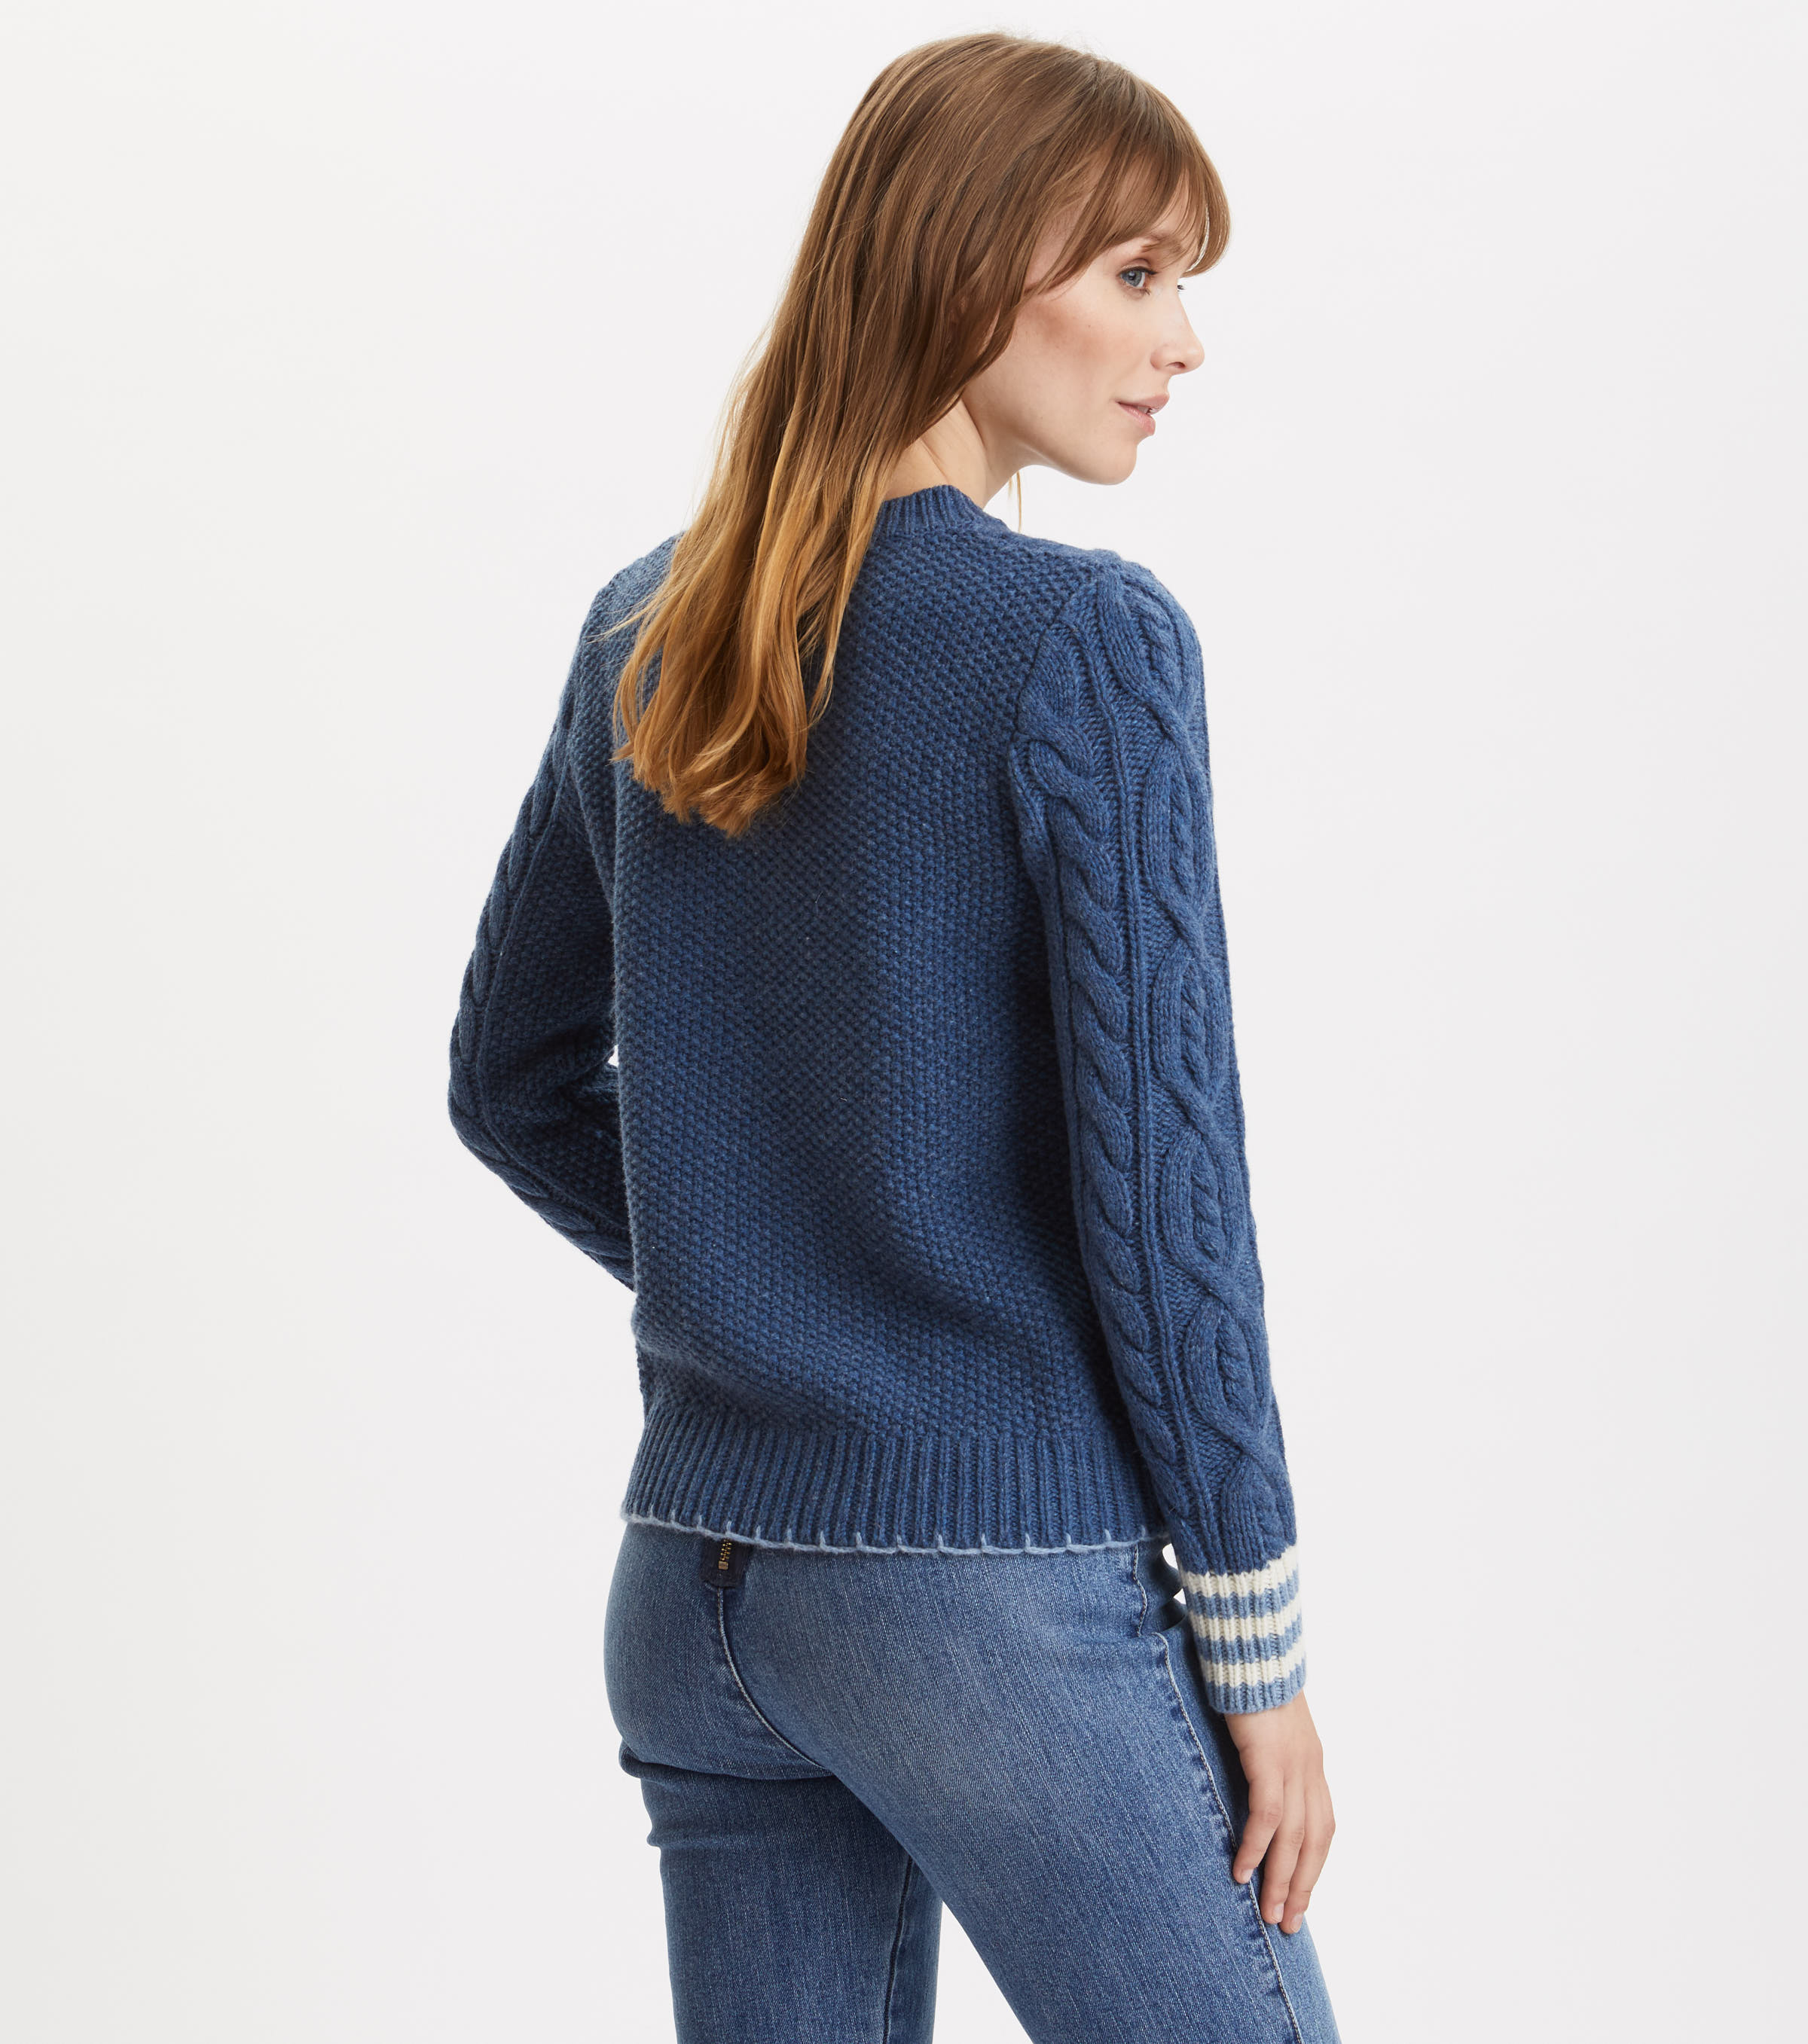 Rabatt 56 % DAMEN Pullovers & Sweatshirts Stricken Even & Odd Pullover Grau S 